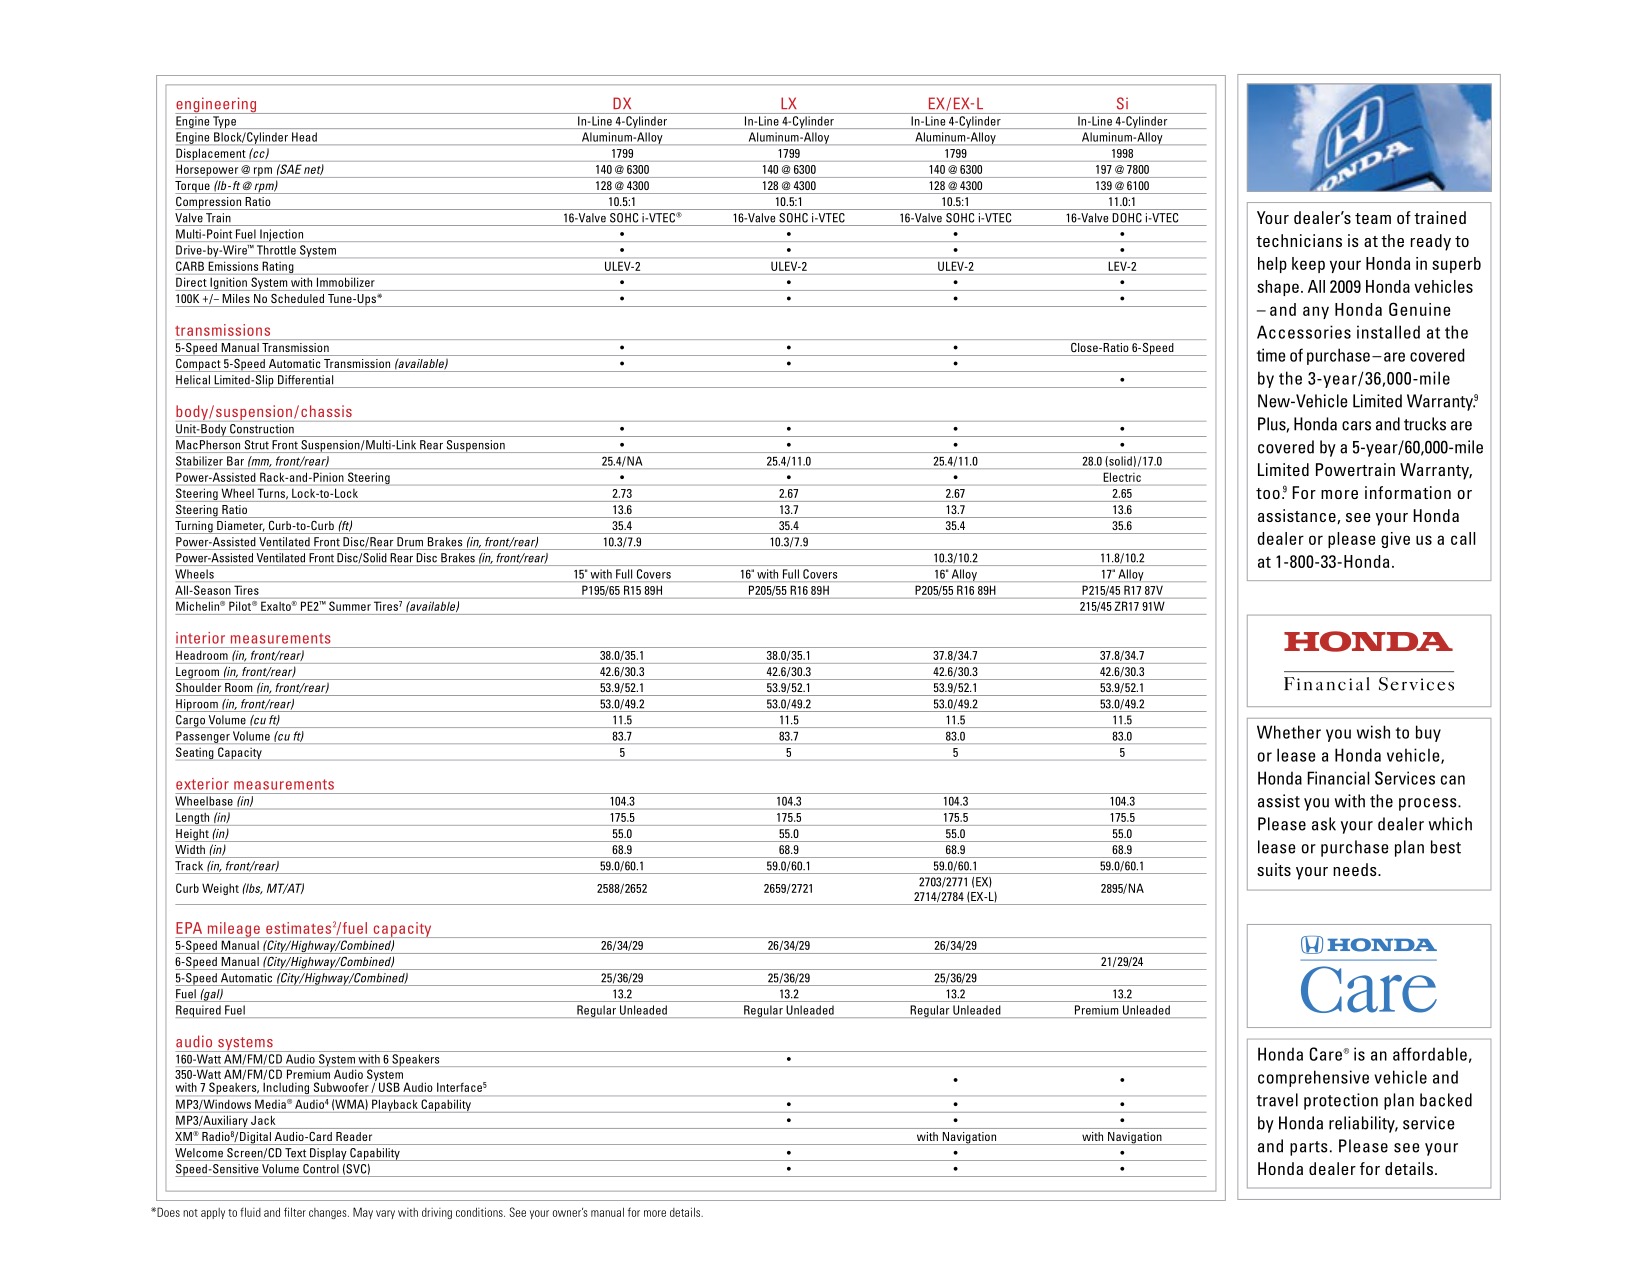 2009 Honda Civic Coupe Brochure Page 15